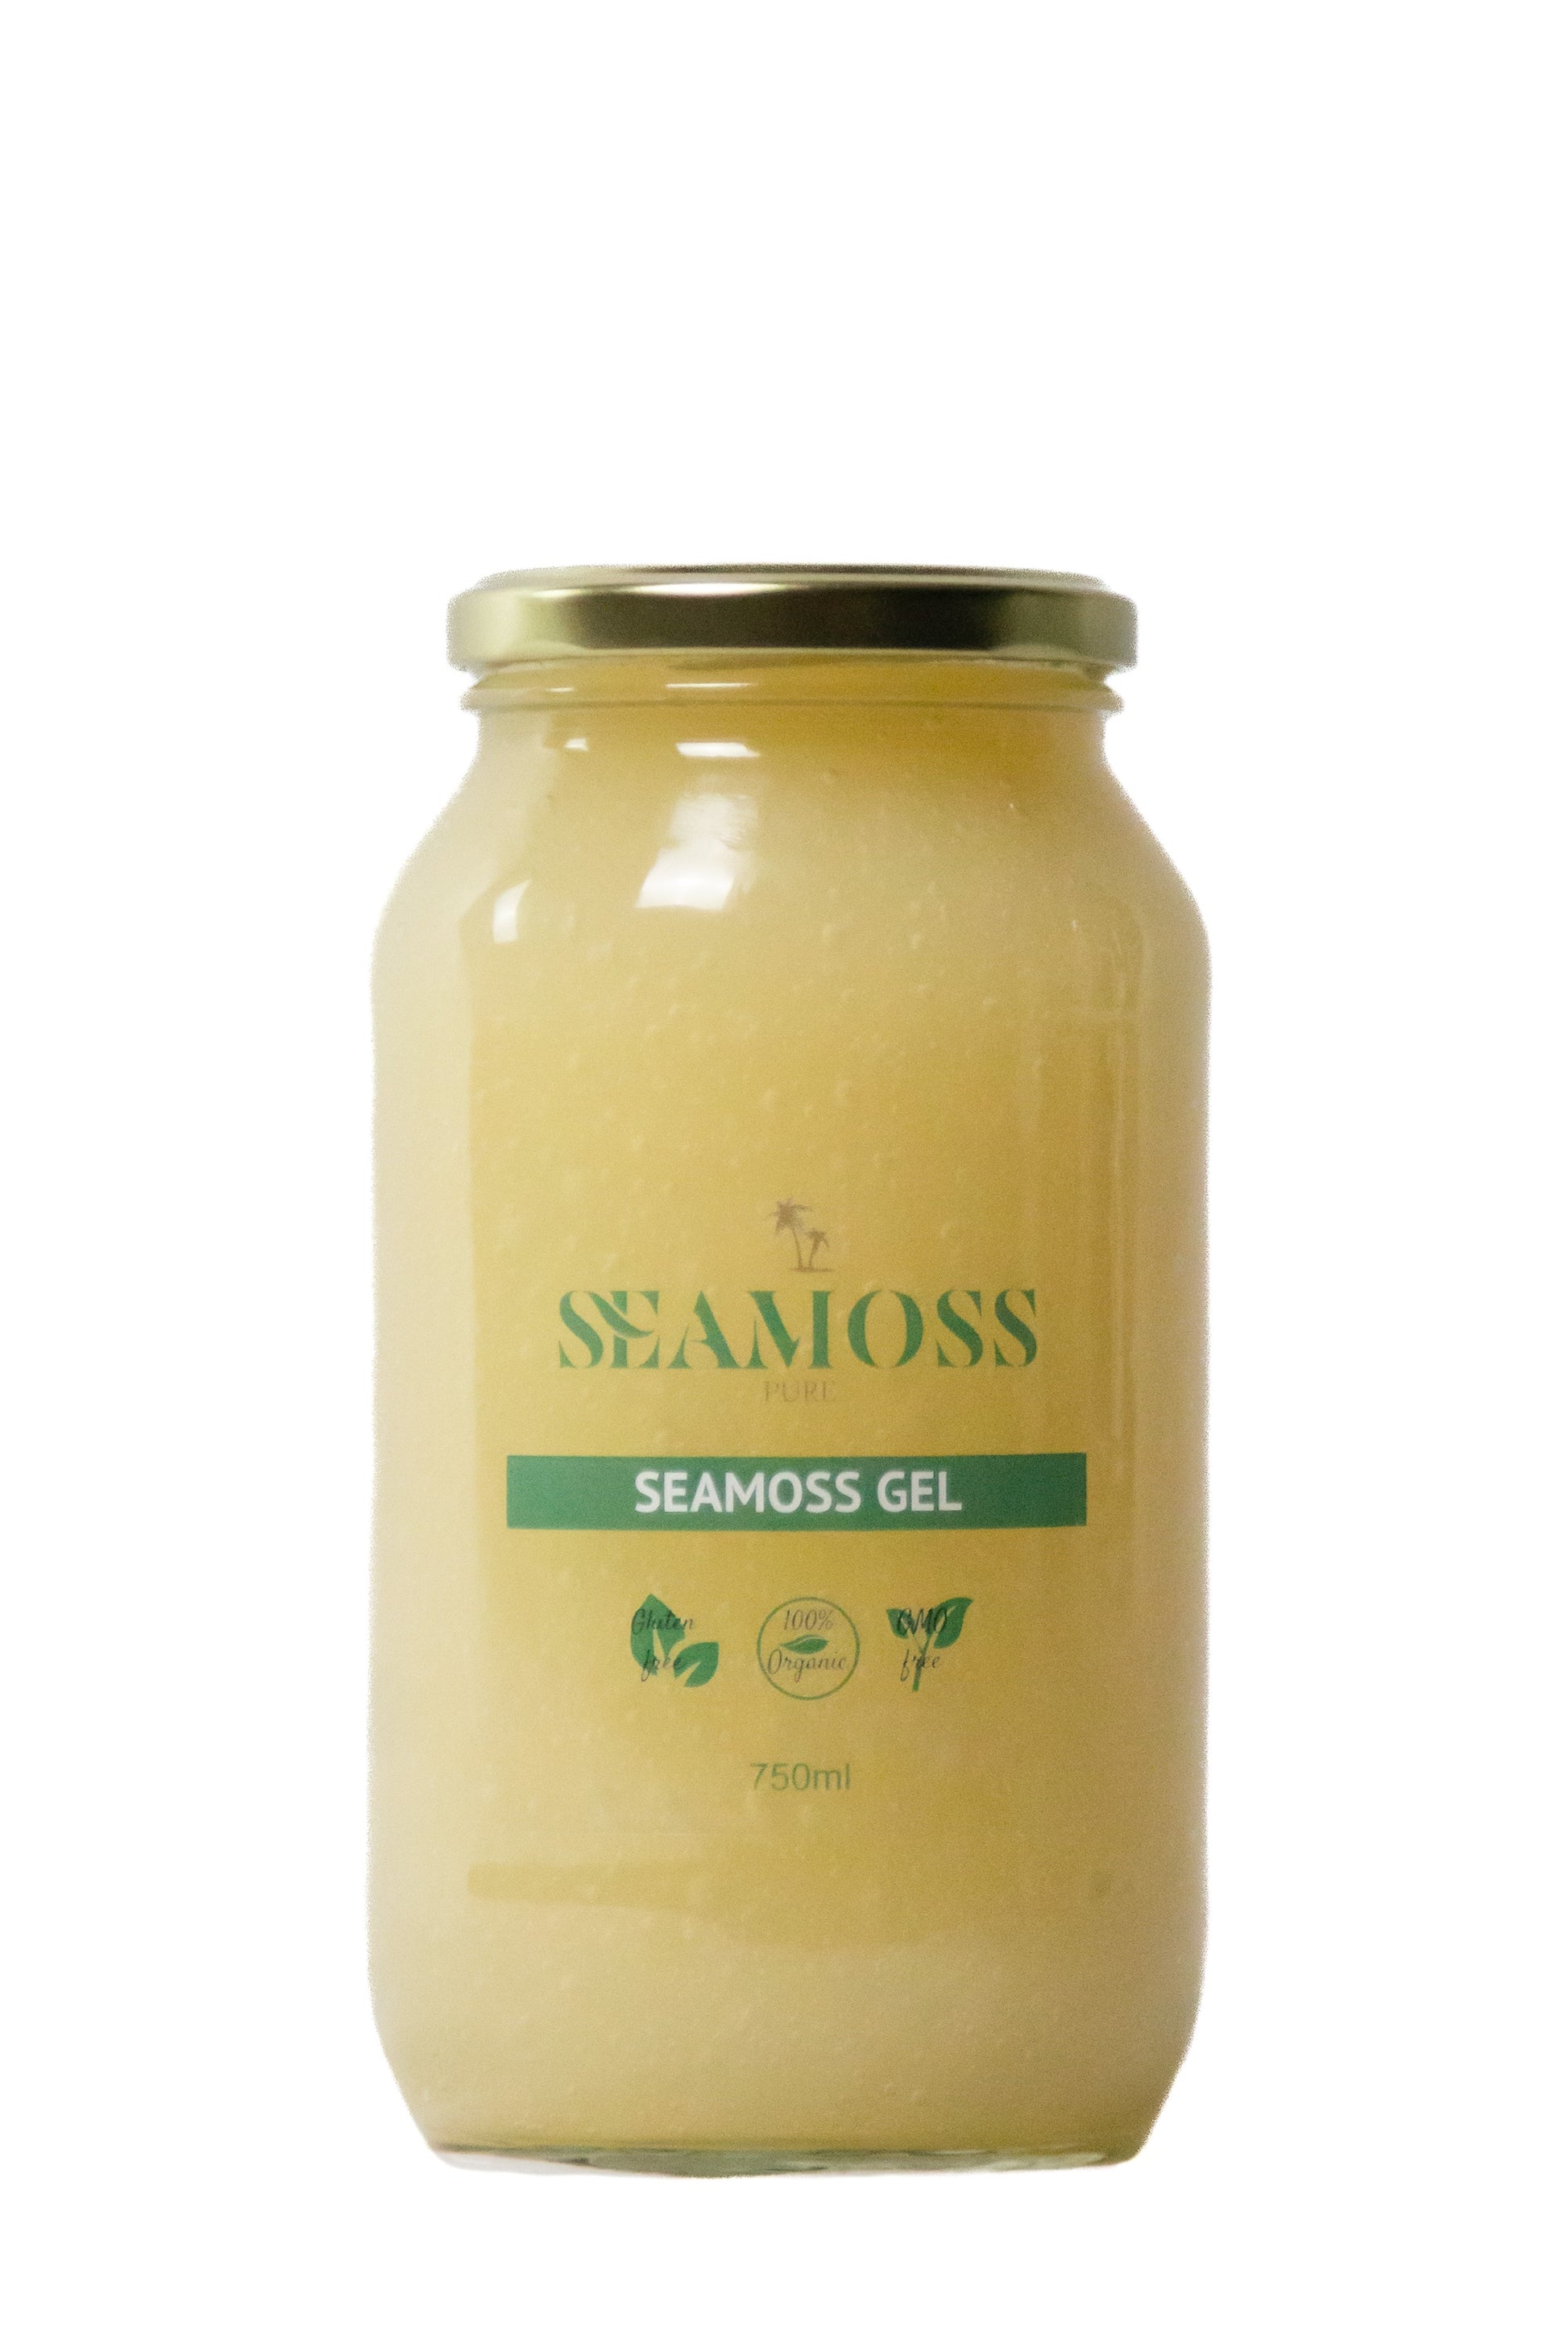 Seamoss Gel 750ml – Seamoss Pure